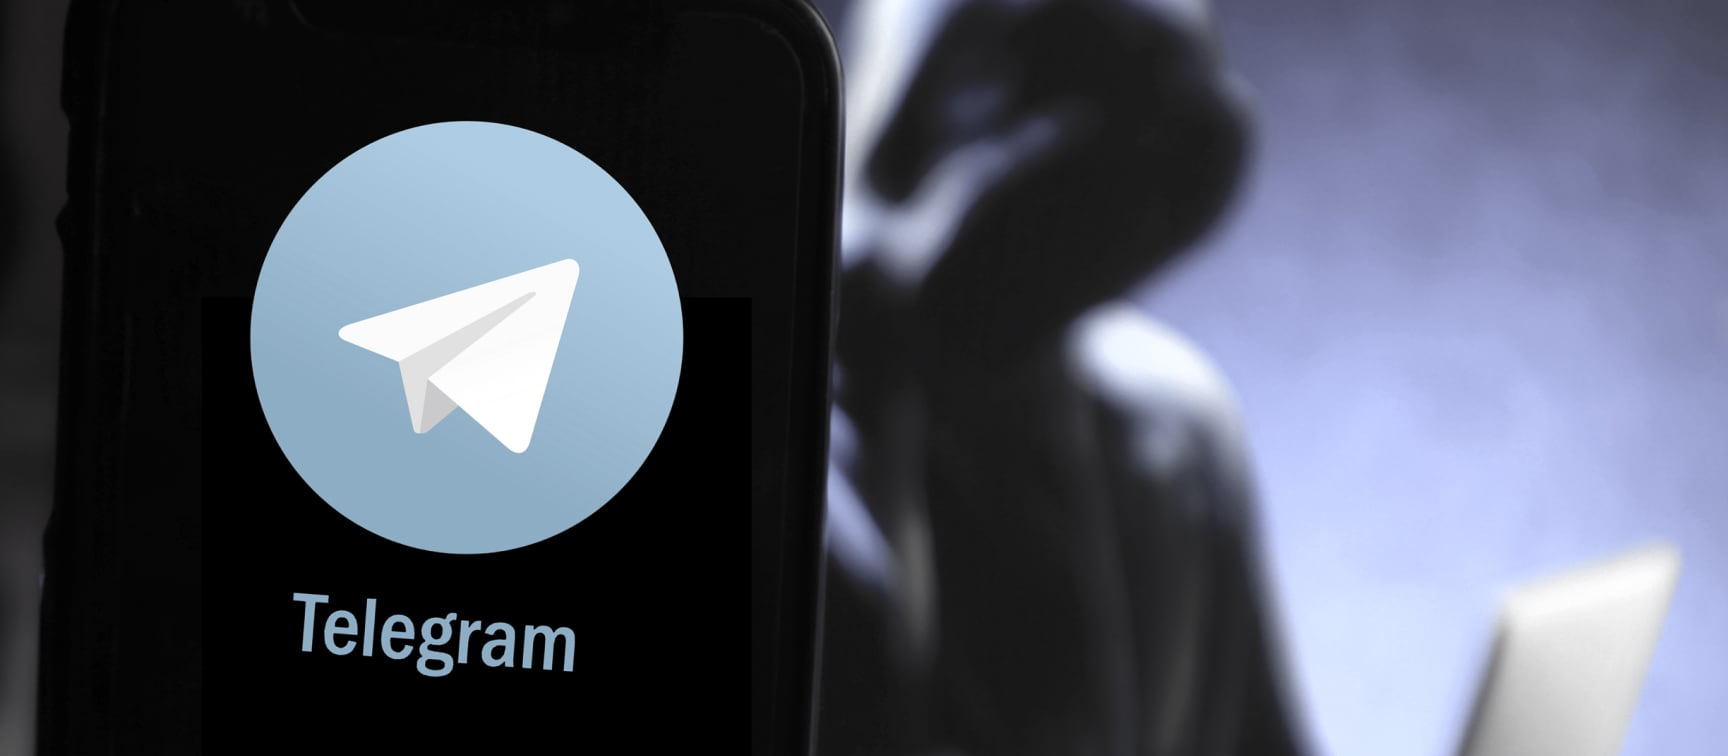 Telegram application on mobile device